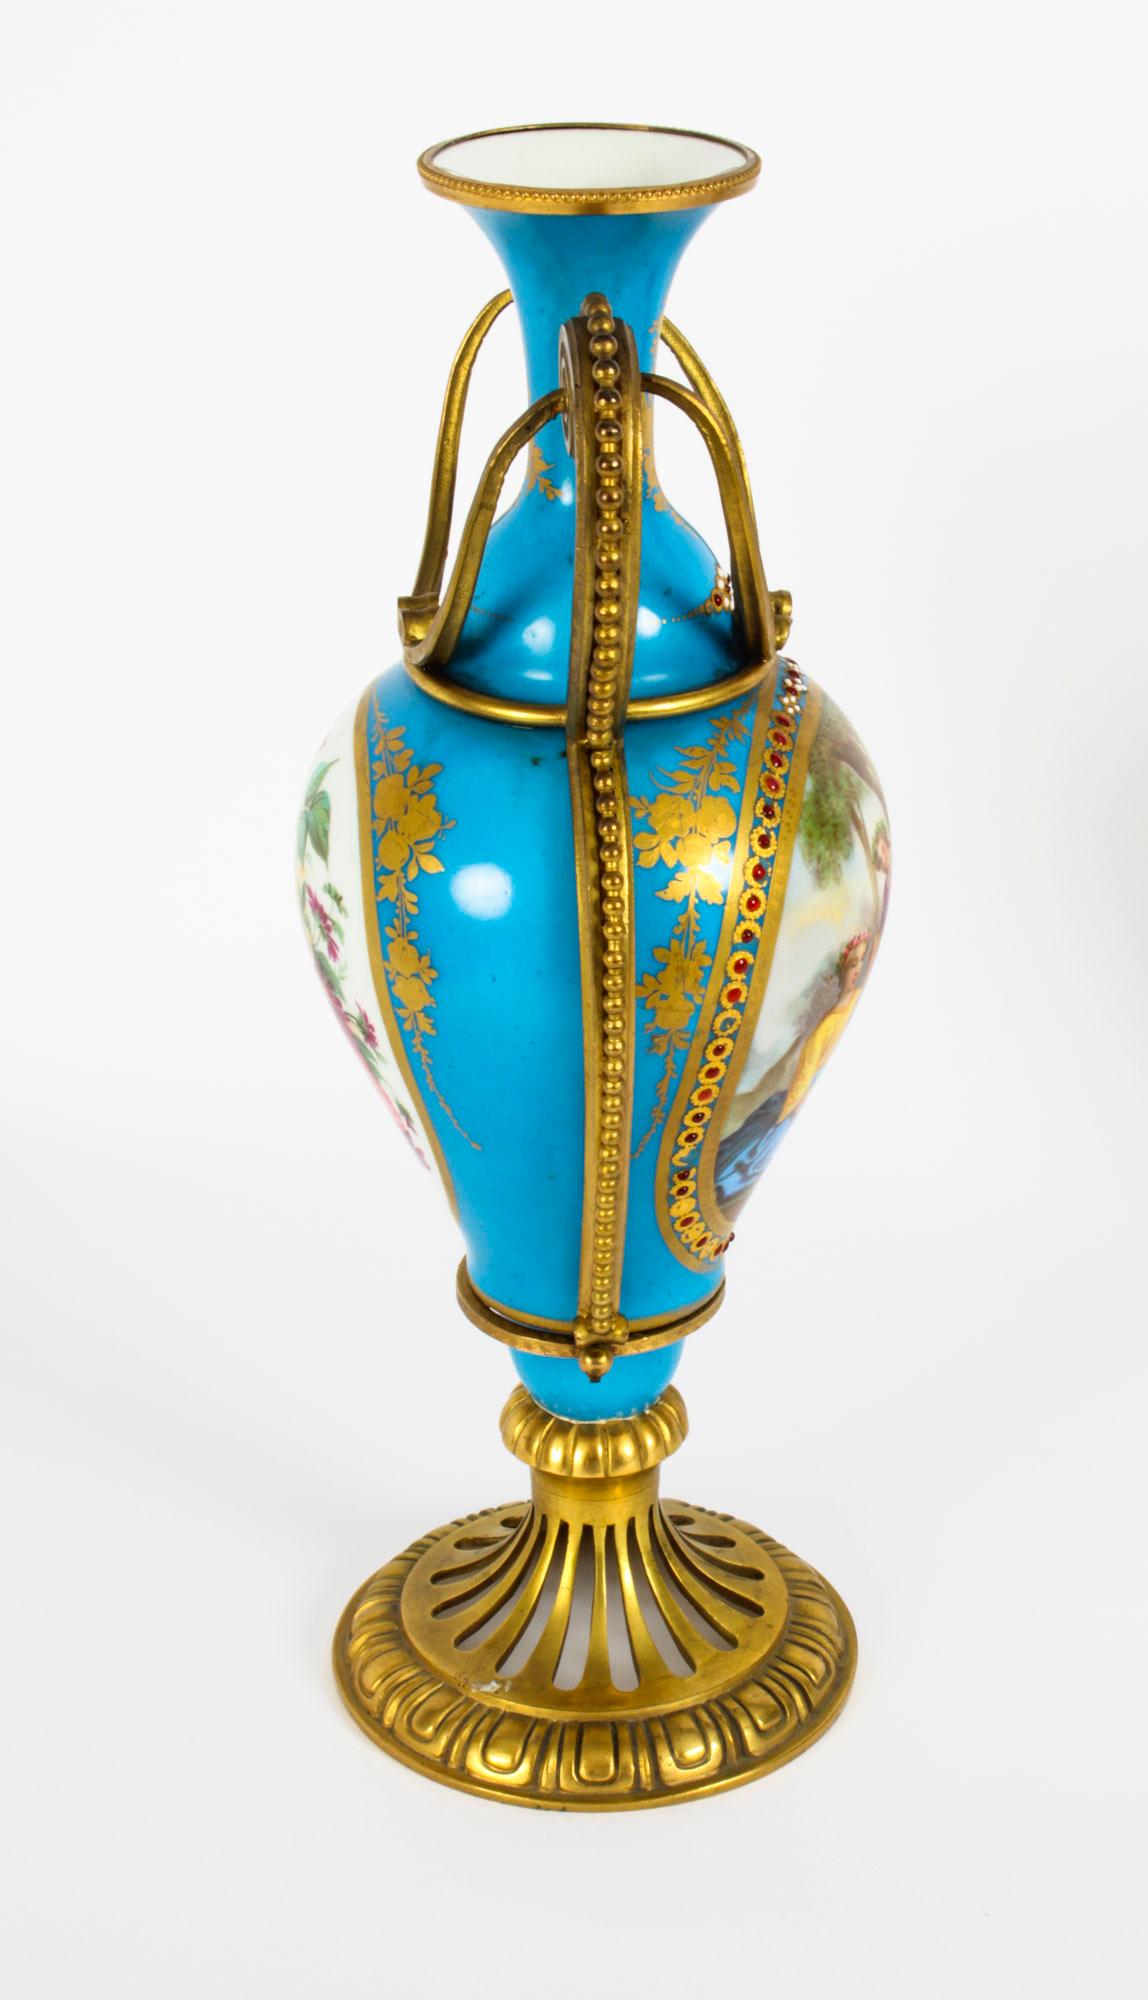 Antique Pair of French Ormolu Mounted Bleu Celeste Sèvres Vases, 19th Century For Sale 2